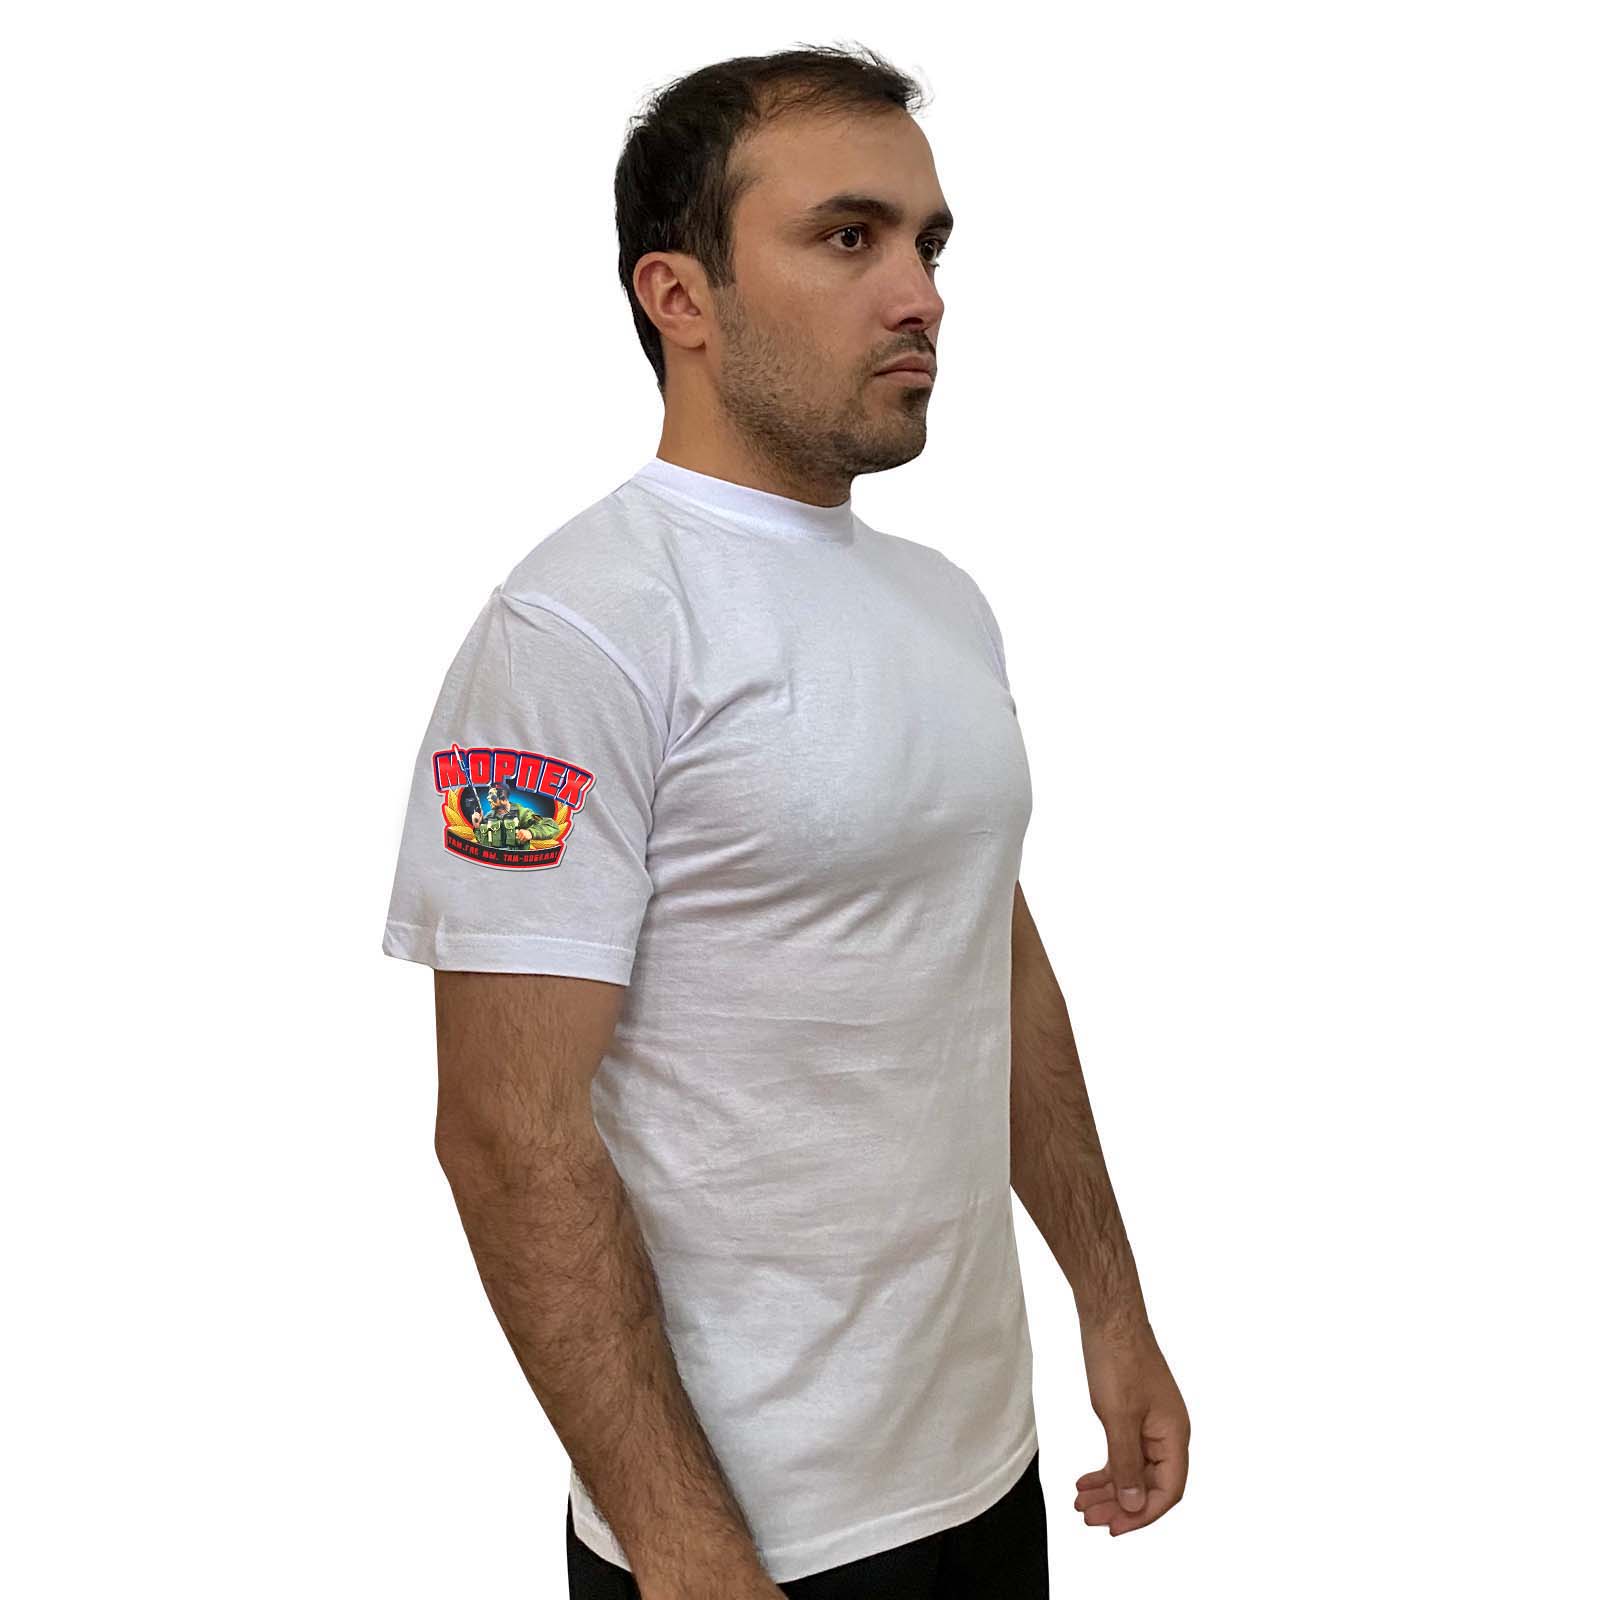 Белая футболка с термотрансфером "Морпех" на рукаве